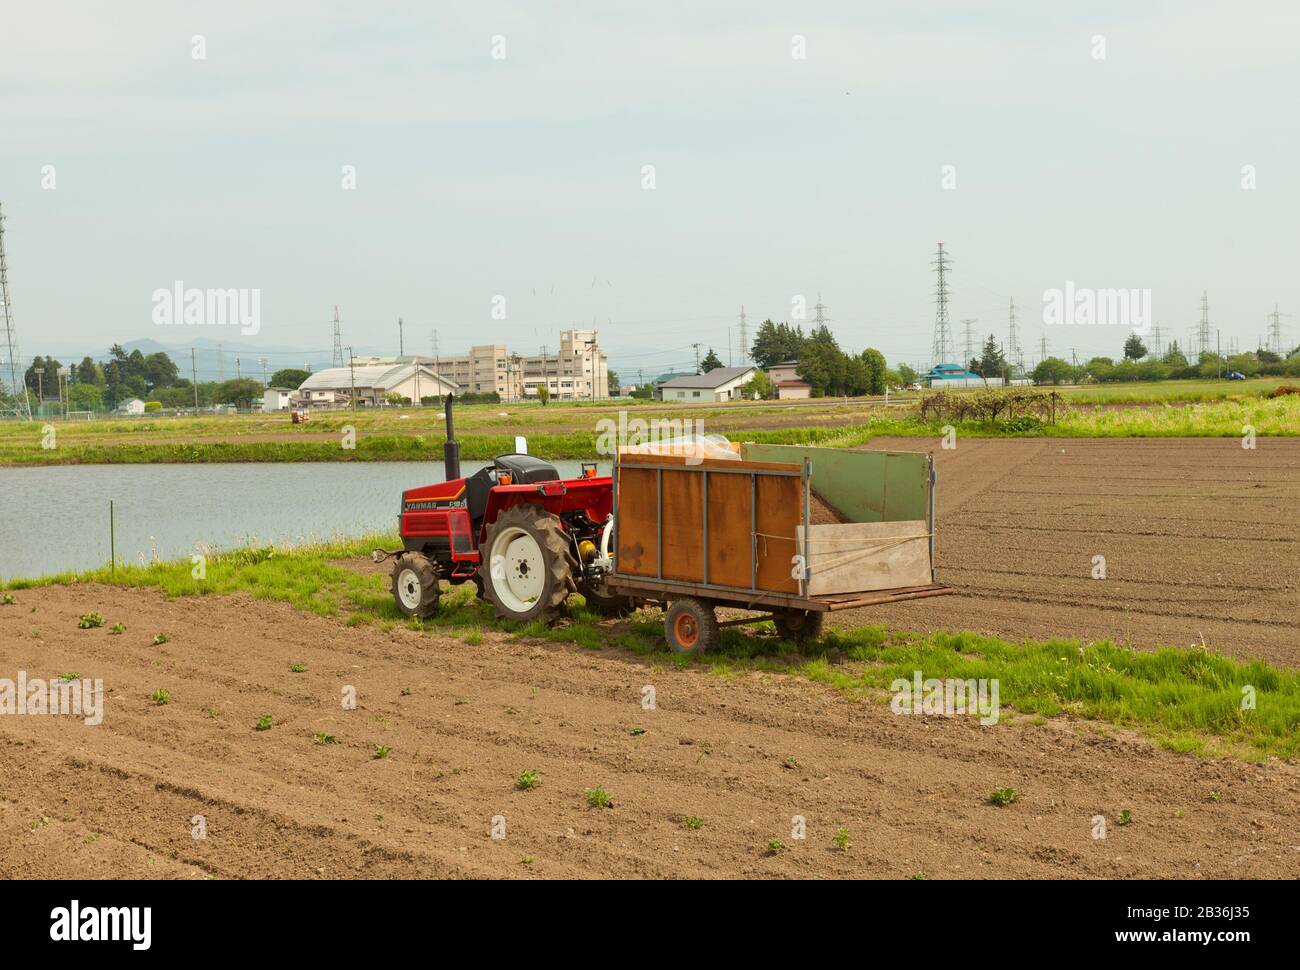 MARIOKA, JAPAN - MAY 22, 2017: Small red Japanese tractor (Yanmar F18d type) with cart on the field near Morioka city, Japan Stock Photo